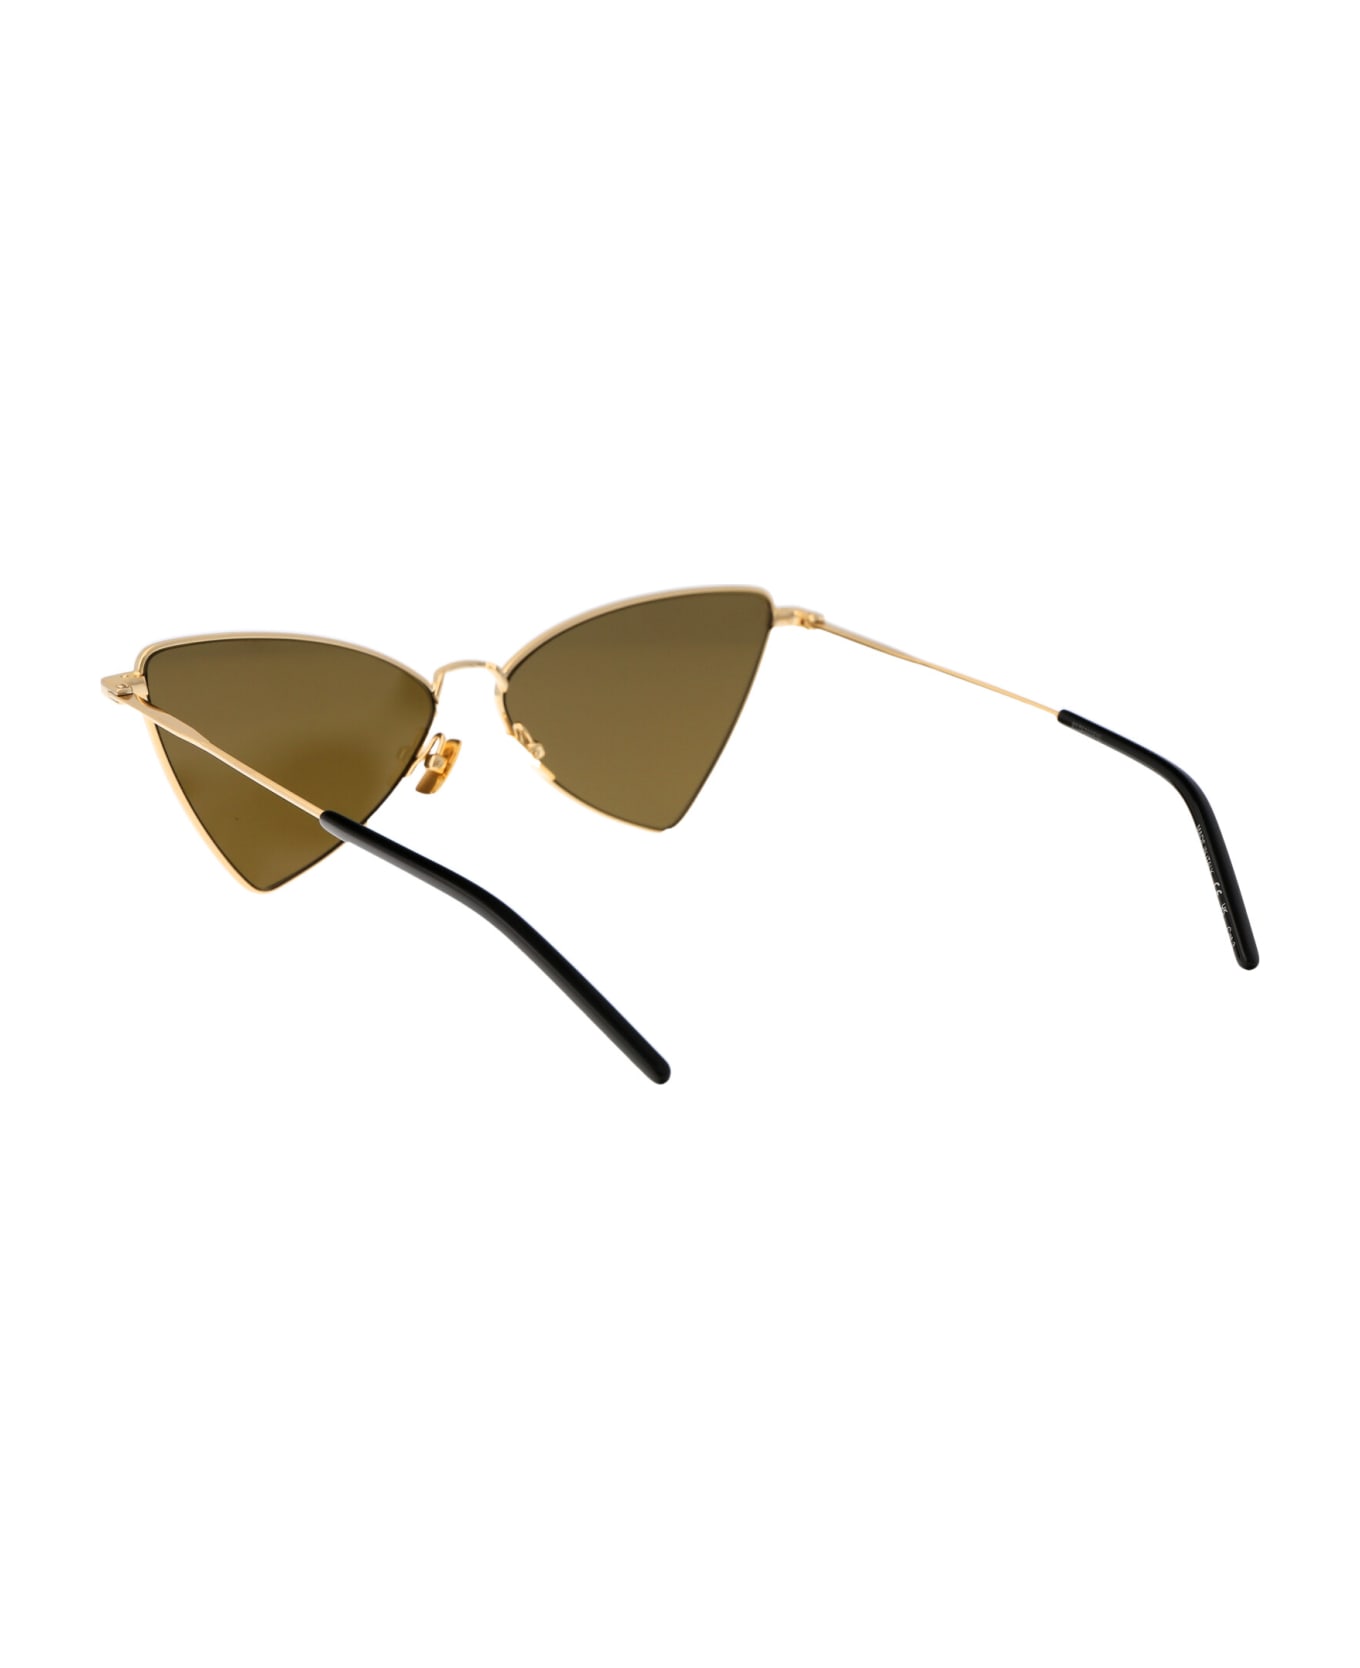 Saint Laurent Eyewear Sl 303 Jerry Sunglasses - 011 GOLD GOLD BROWN サングラス